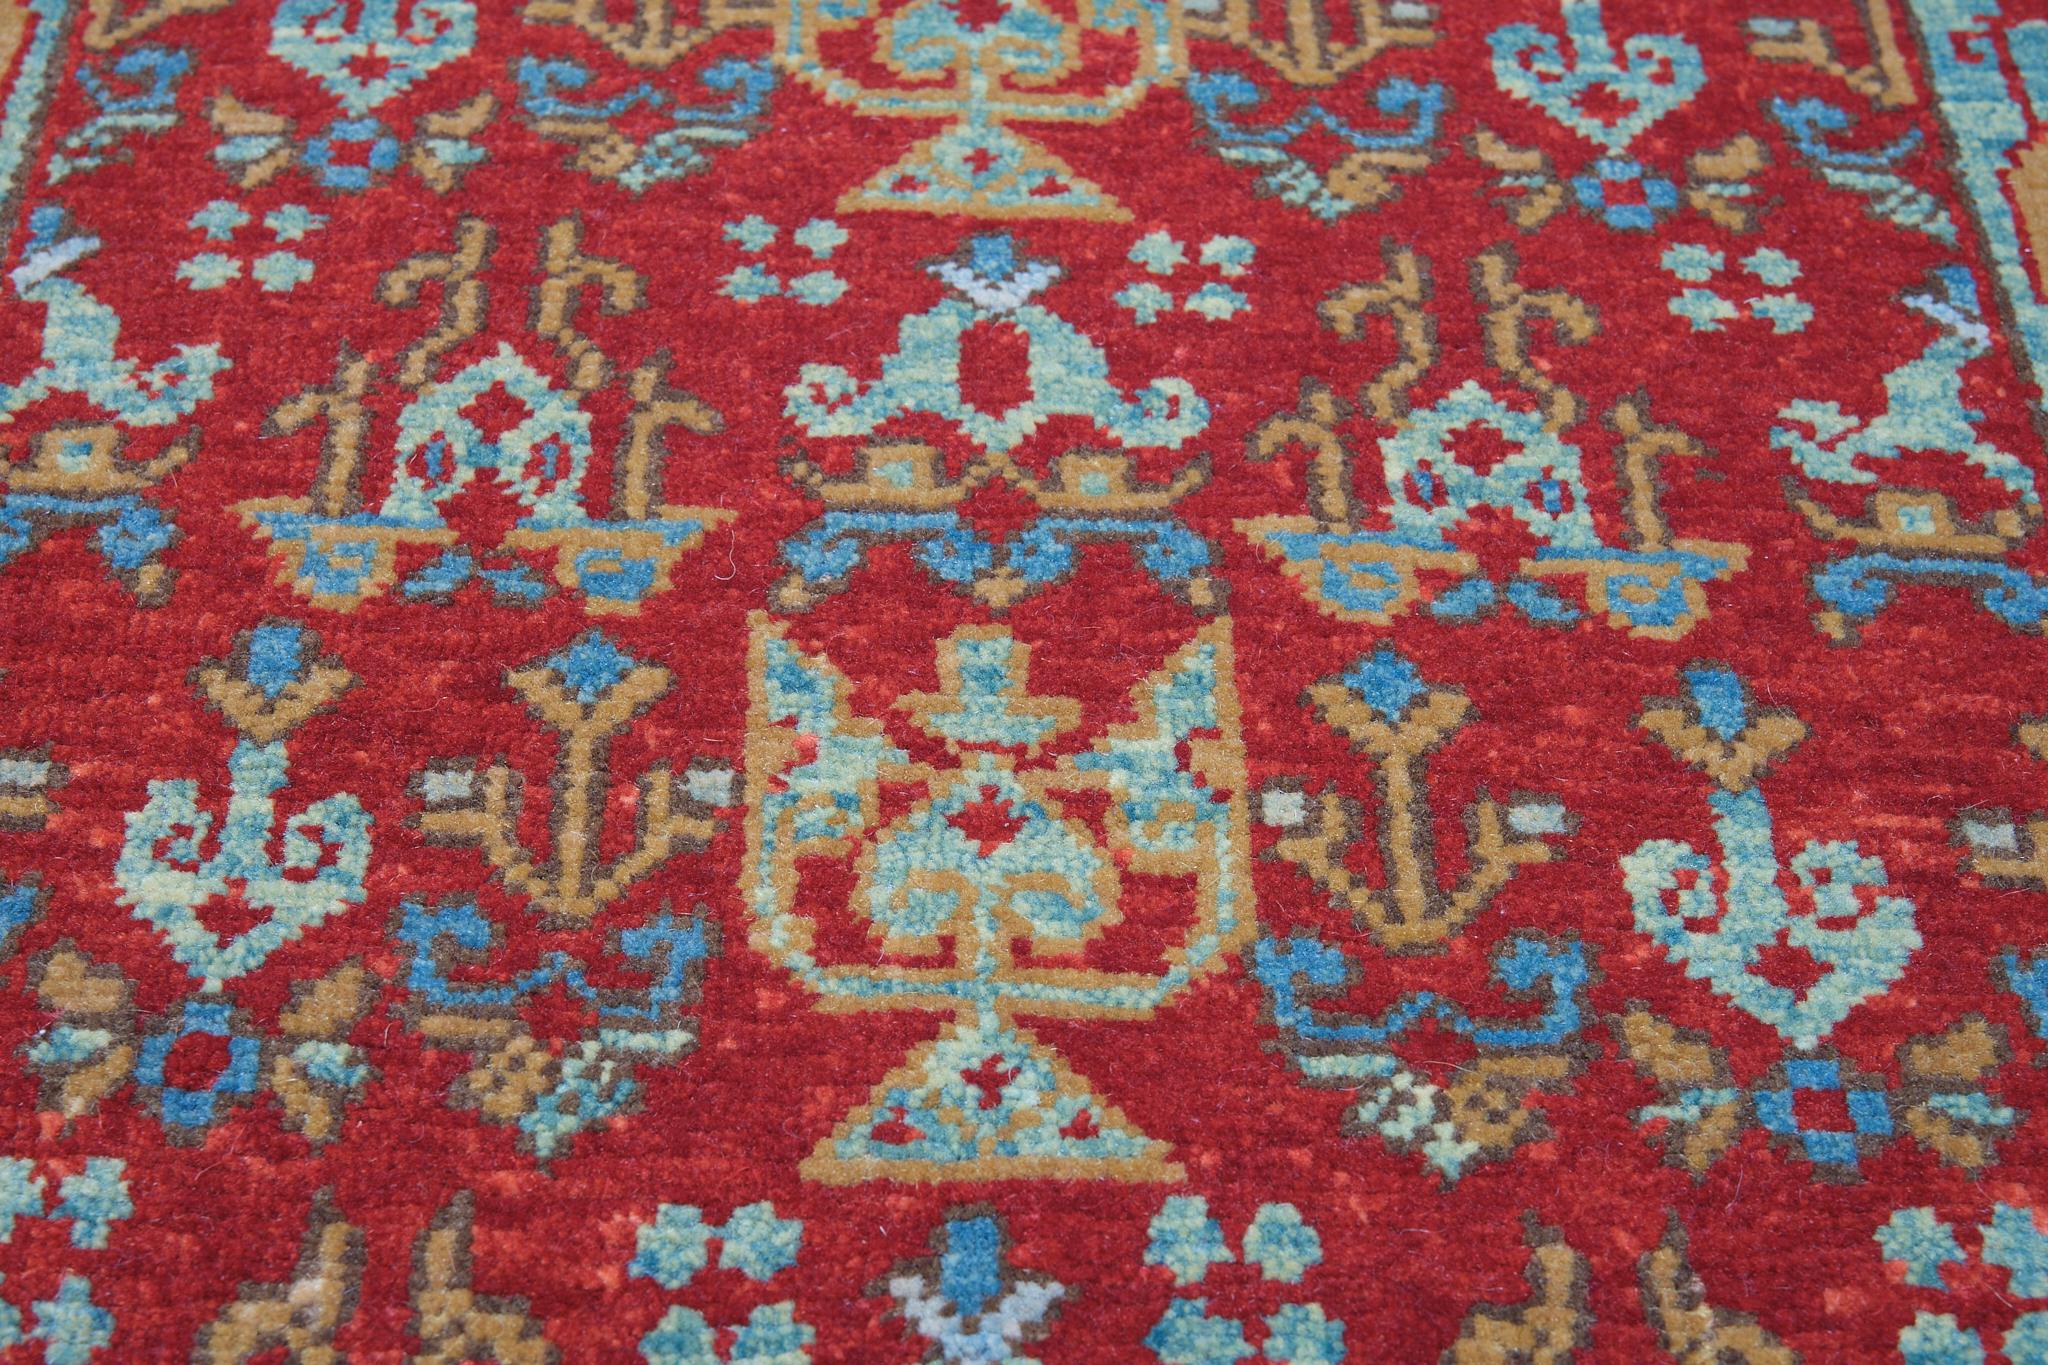 Turkish Ararat Rugs Mamluk Wagireh Rug with Candelabra Elems Revival Carpet Natural Dyed For Sale